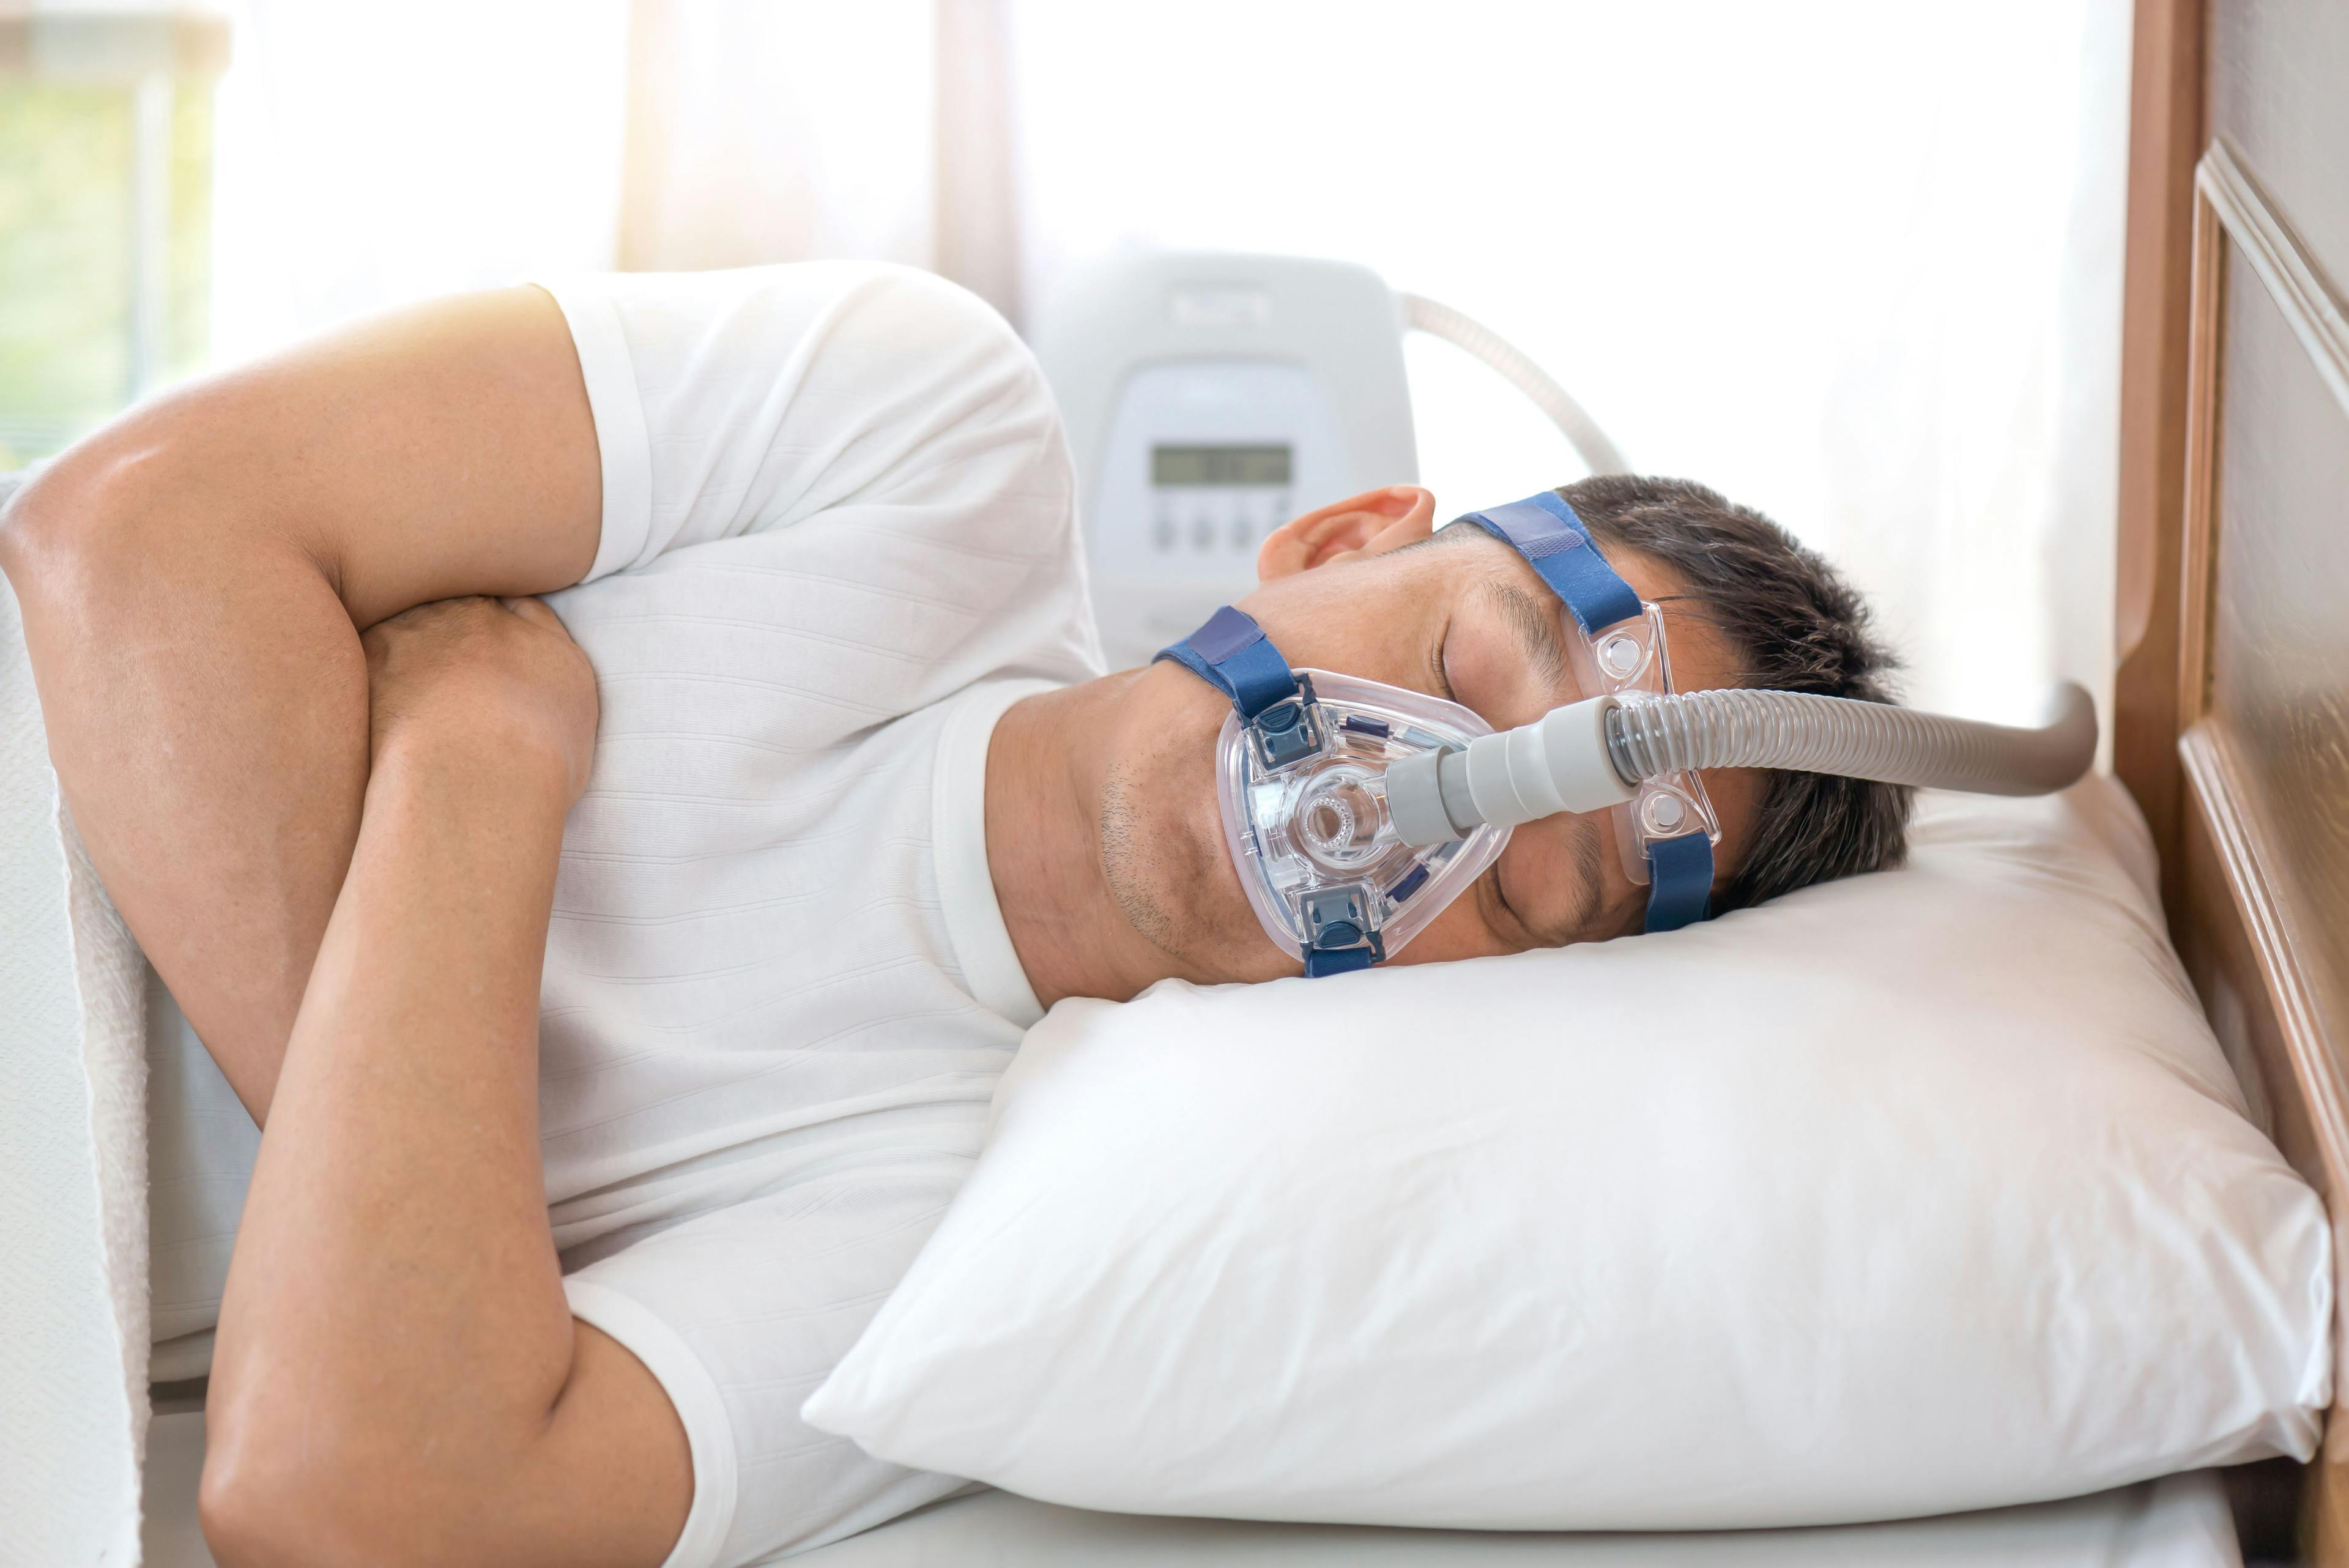 Man Sleeping With CPAP Mask for Sleep Apnea | image credit: sbw19 - stock.adobe.com